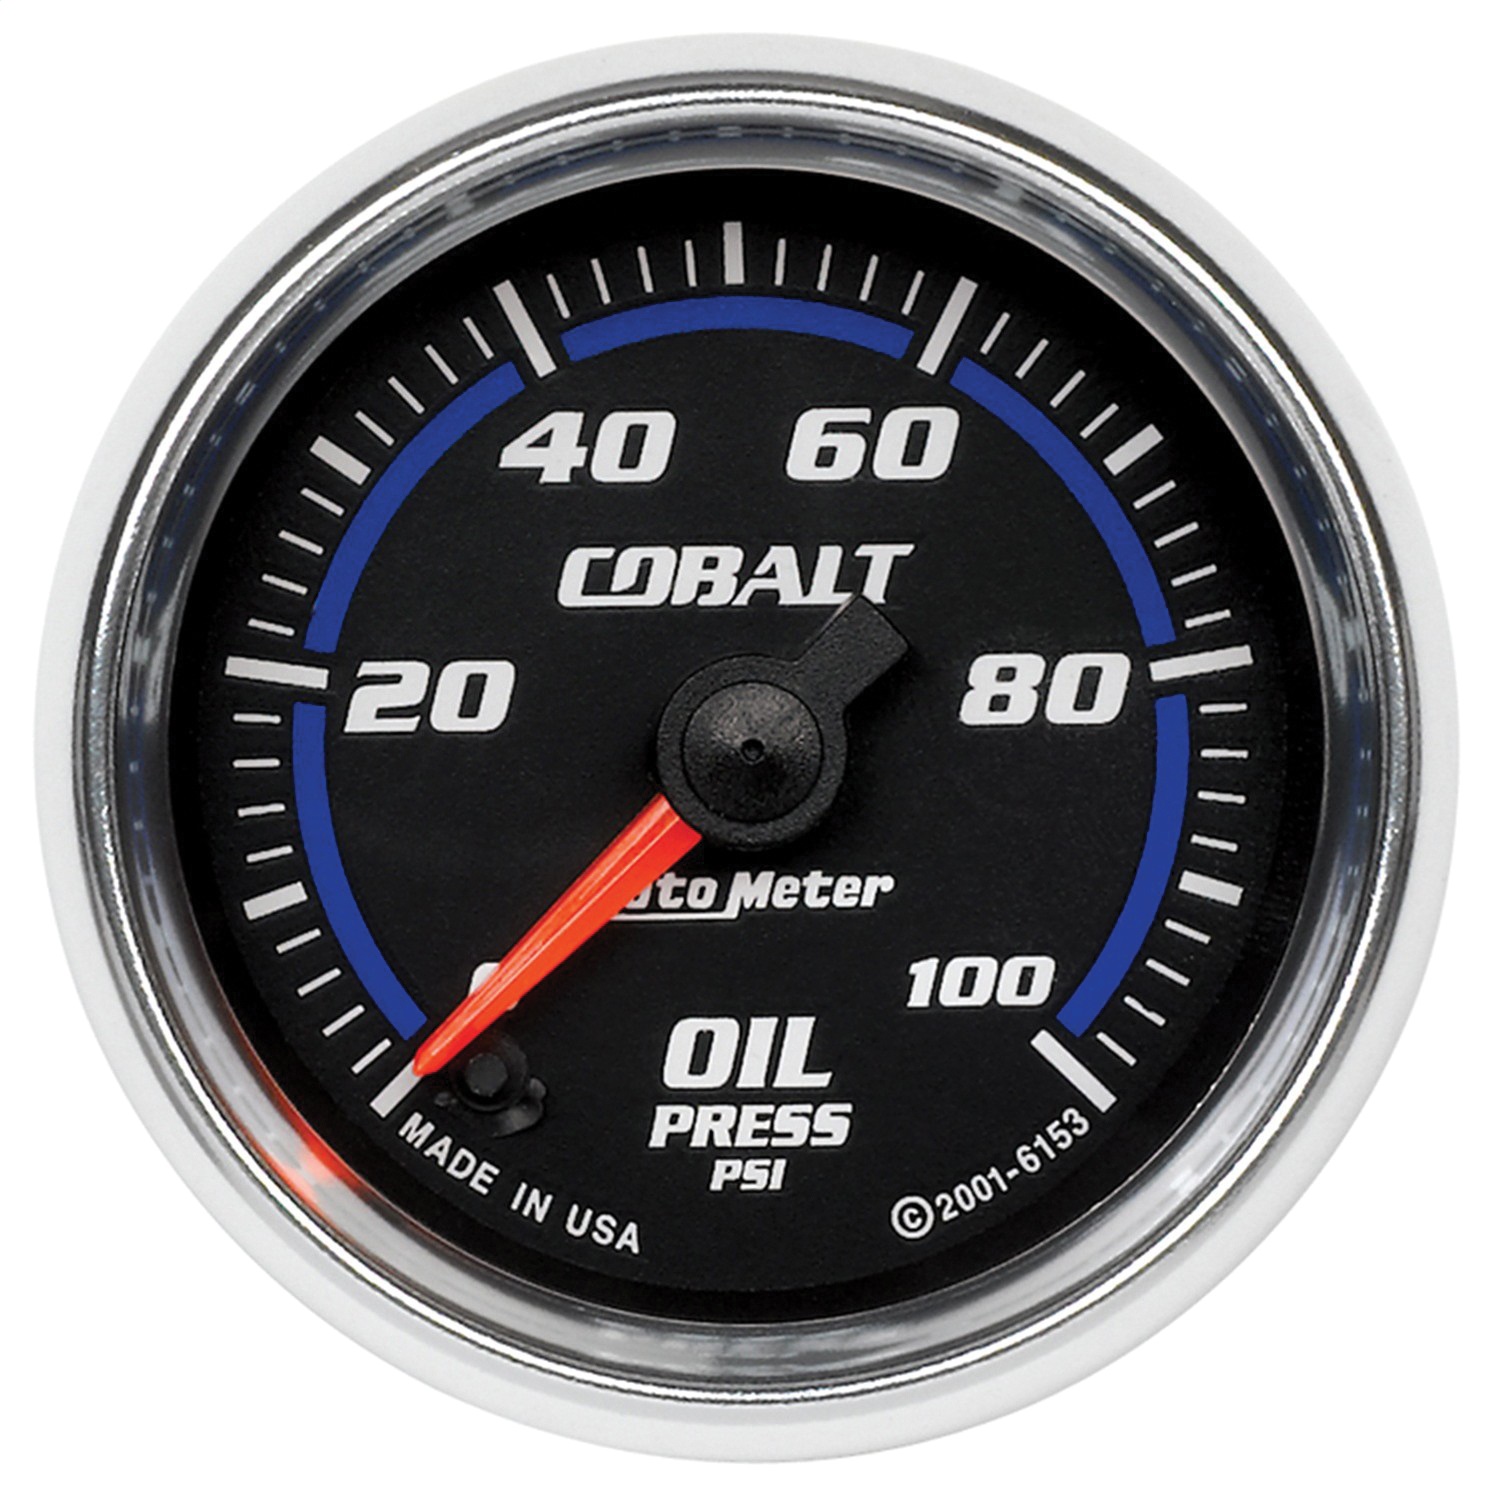 Auto Meter Auto Meter 6153 Cobalt; Electric Oil Pressure Gauge